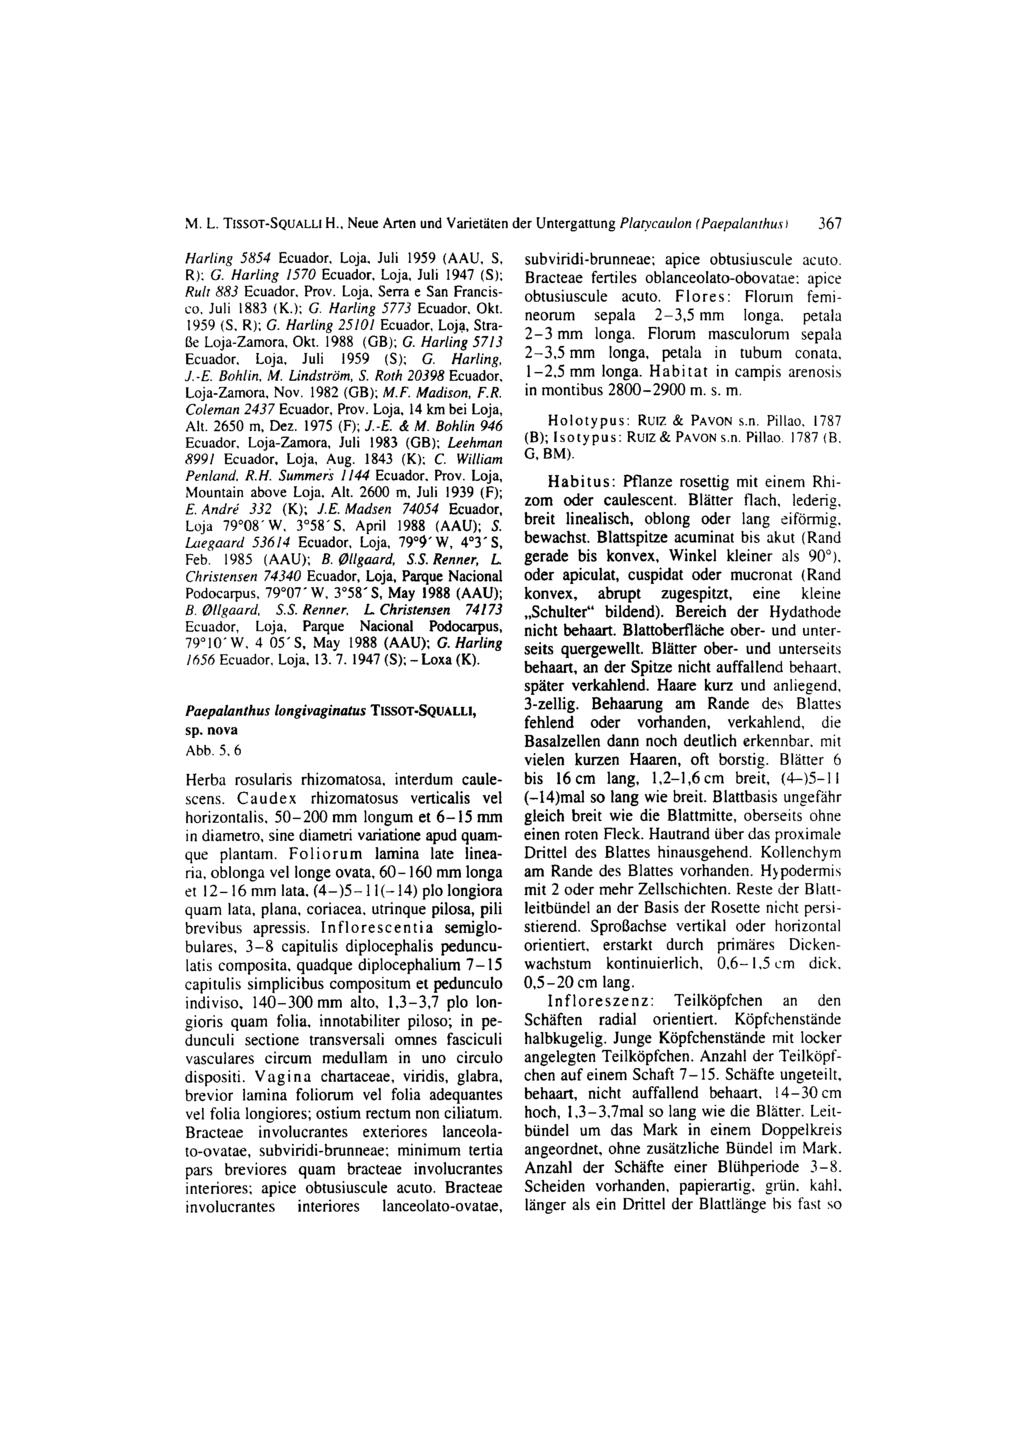 M. L. TISSOT-SQUALL1 H., Neue Arten und Varietaten der Untergattung Playcardon (Pnepalanrhus I 367 Hurling 5854 Ecuador, Loja. Juli 1959 (AAU, S, R): G.